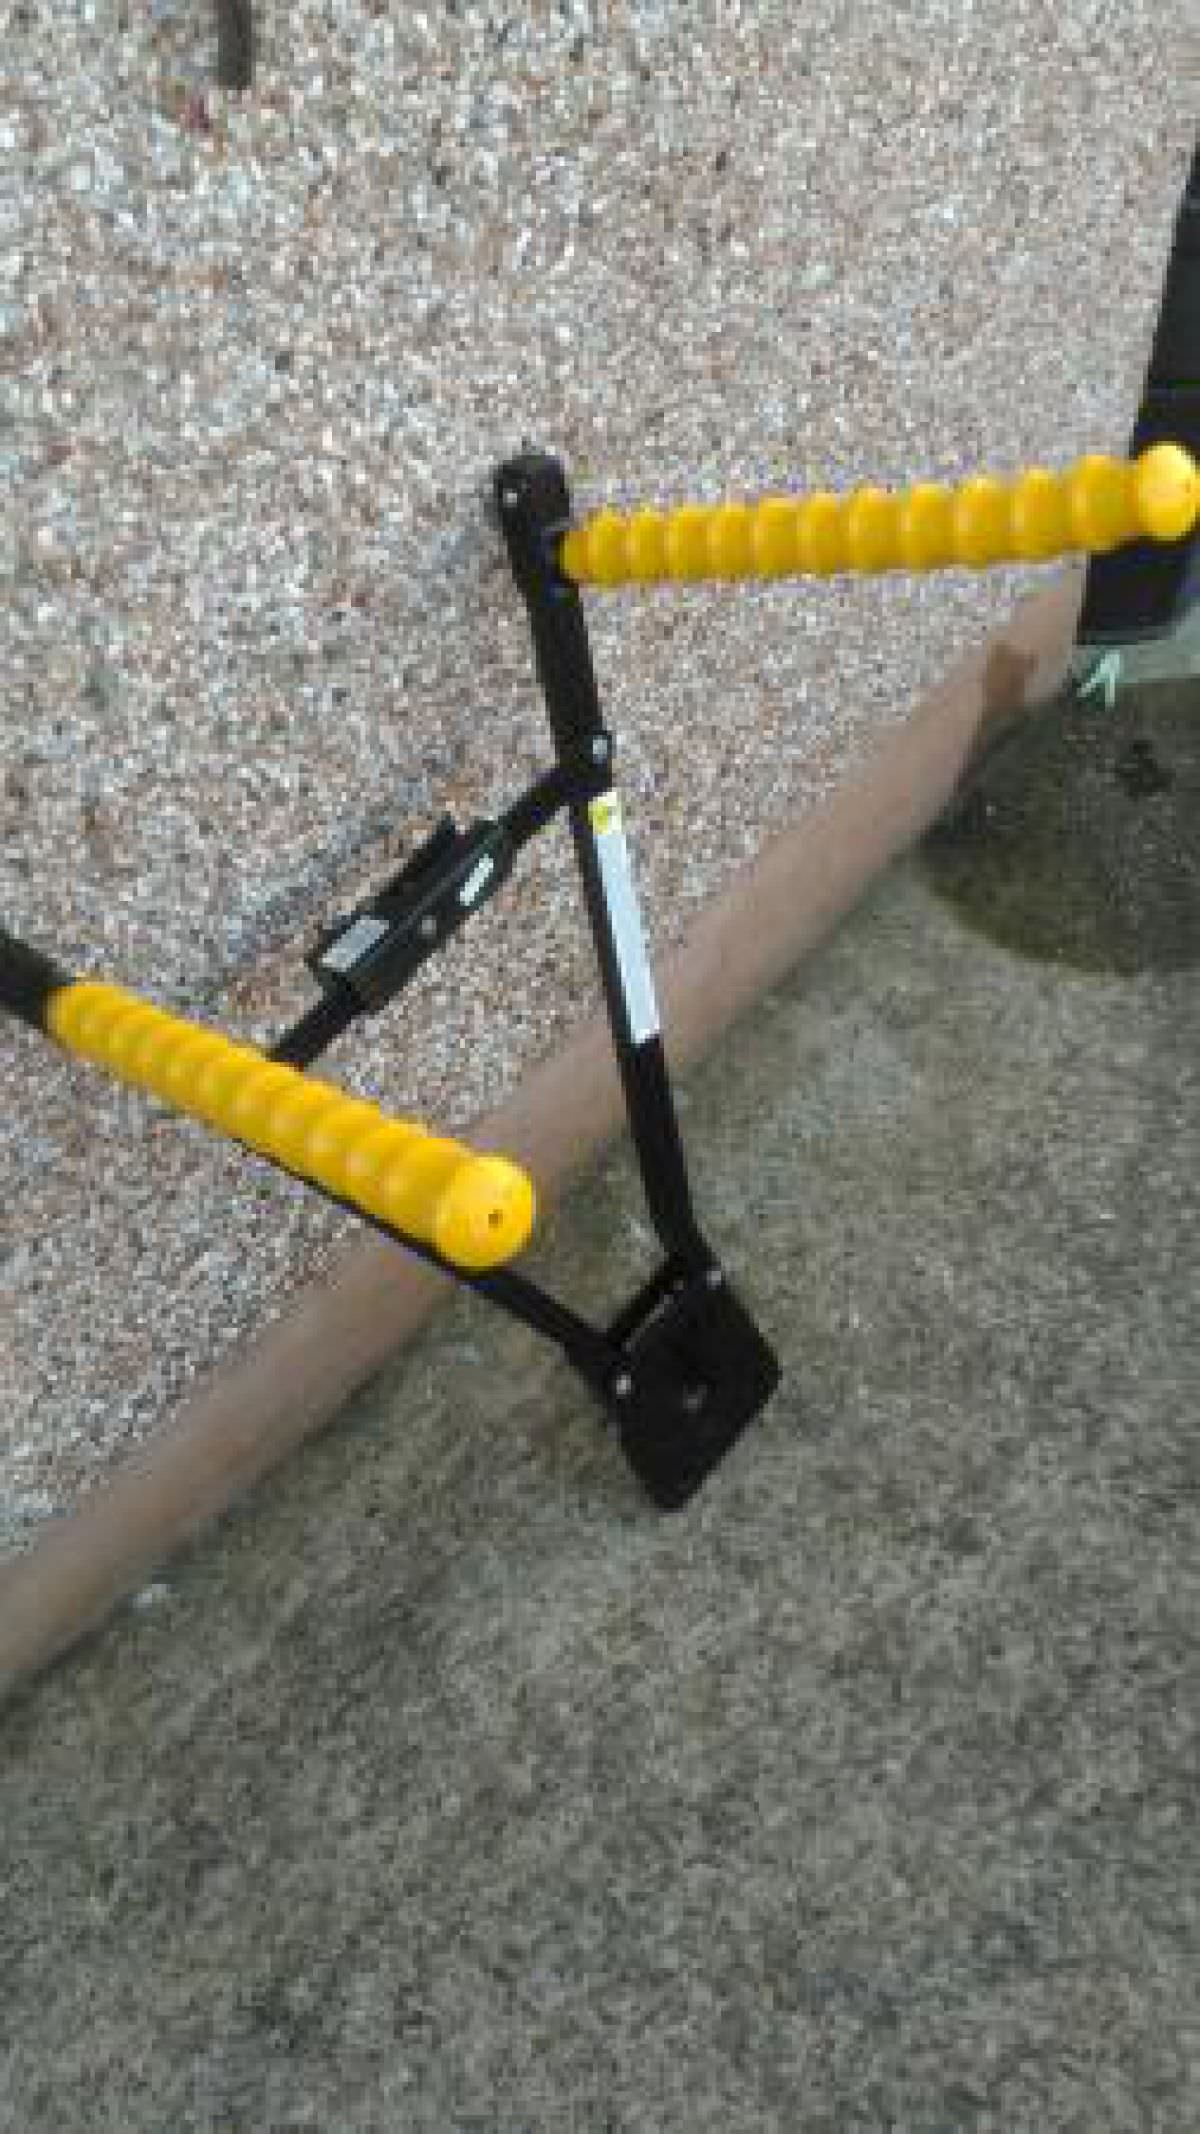 tow bar mounted bike rack